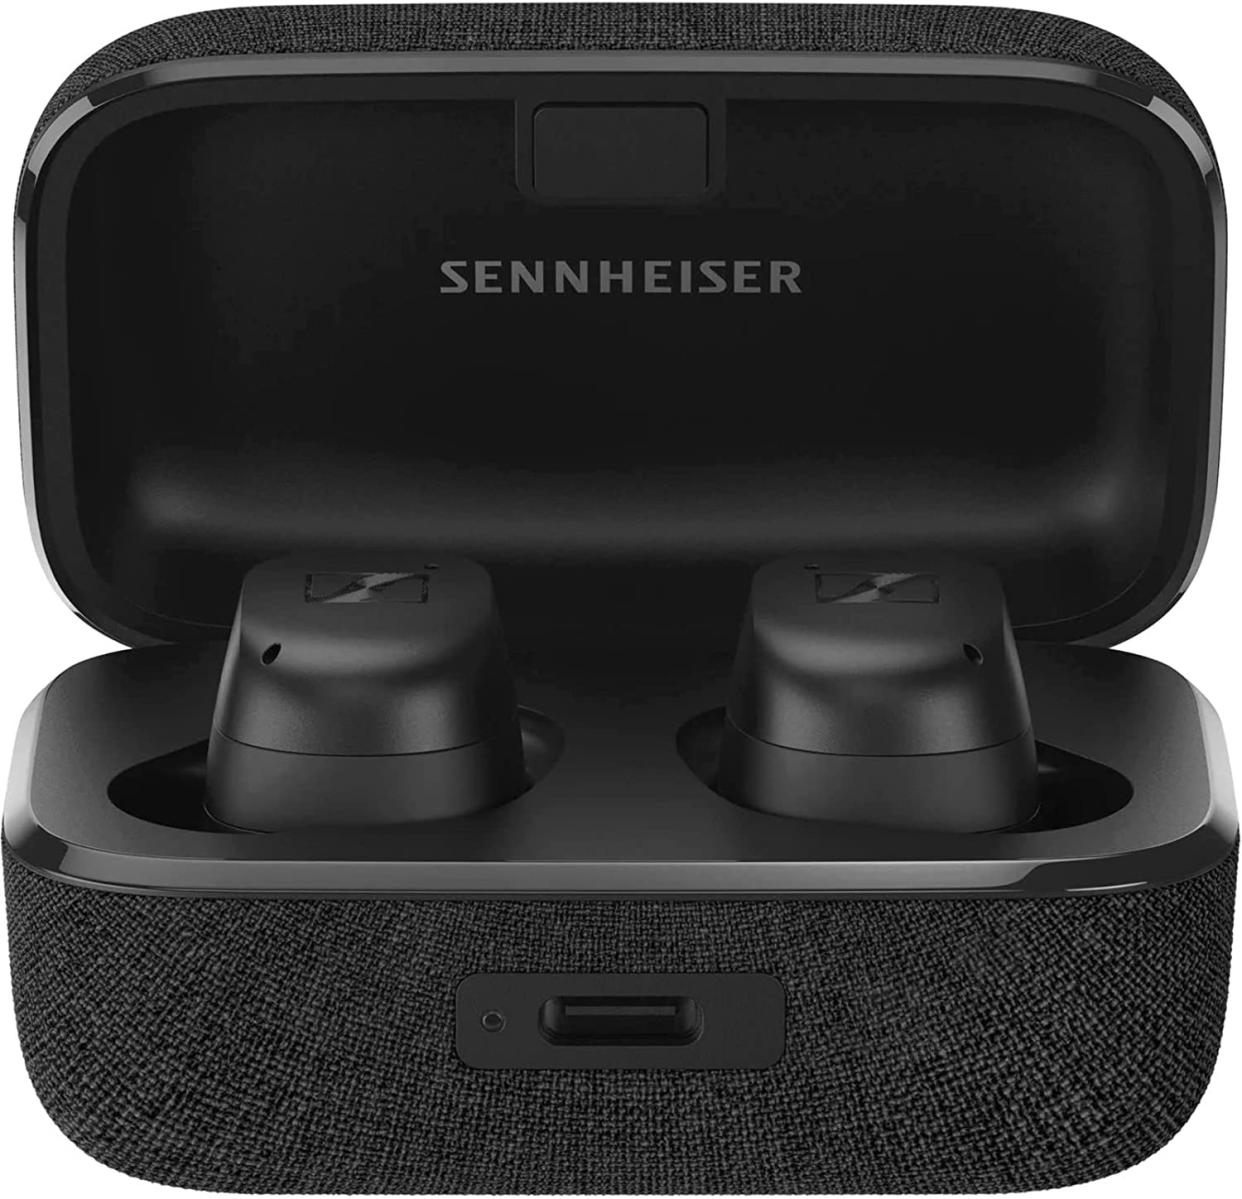 Sennheiser Momentum 3 Wireless Earbuds in black